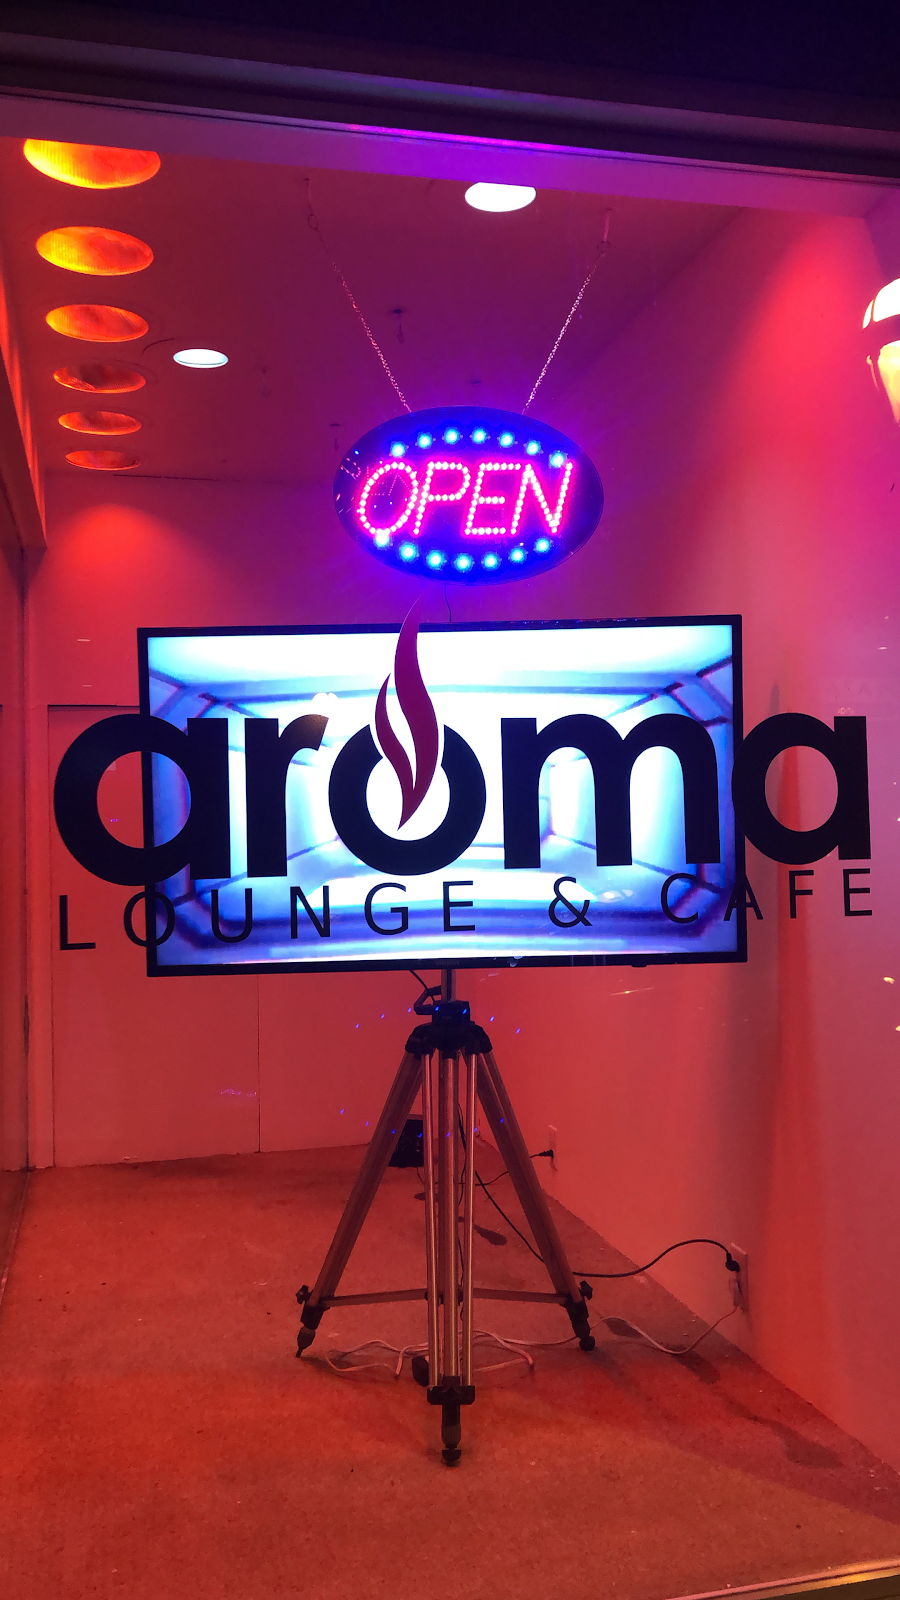 Aroma Lounge & Cafe | restaurant | 44 W Broad St, Bethlehem, PA 18018, USA | 4847192613 OR +1 484-719-2613